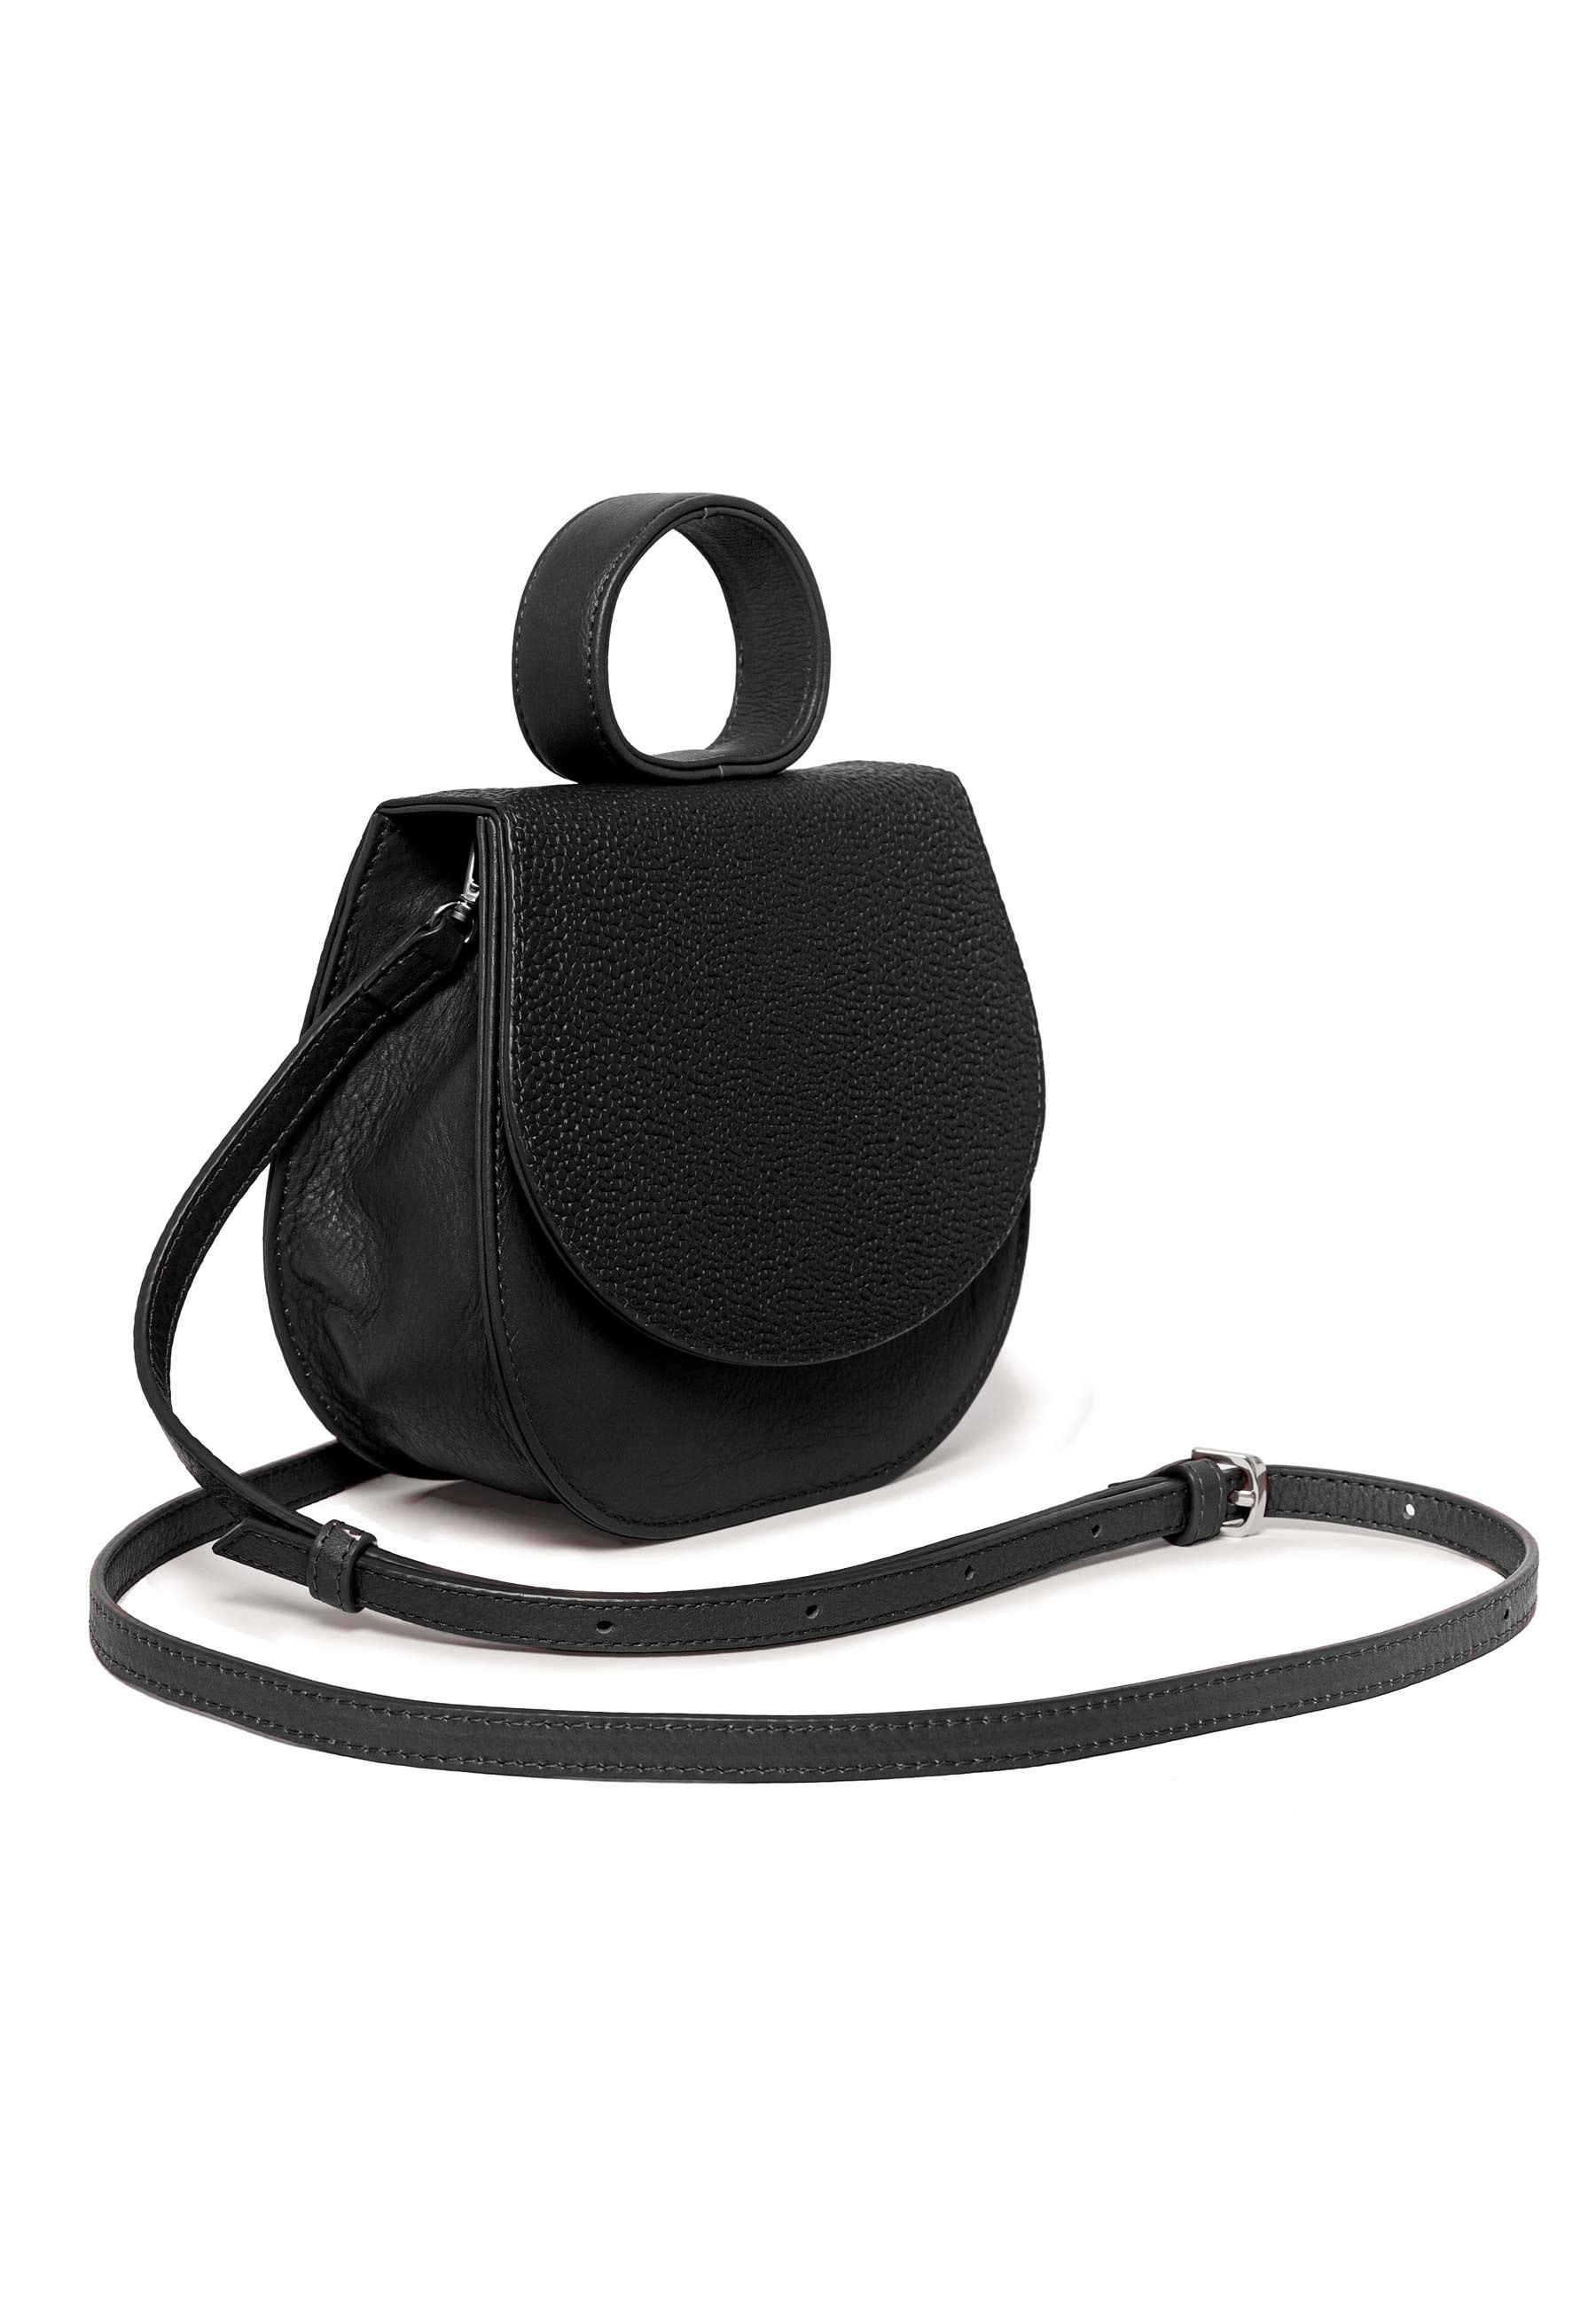 GRETCHEN Schultertasche »Ebony Mini Loop Bag«, aus italienischem Kalbsleder